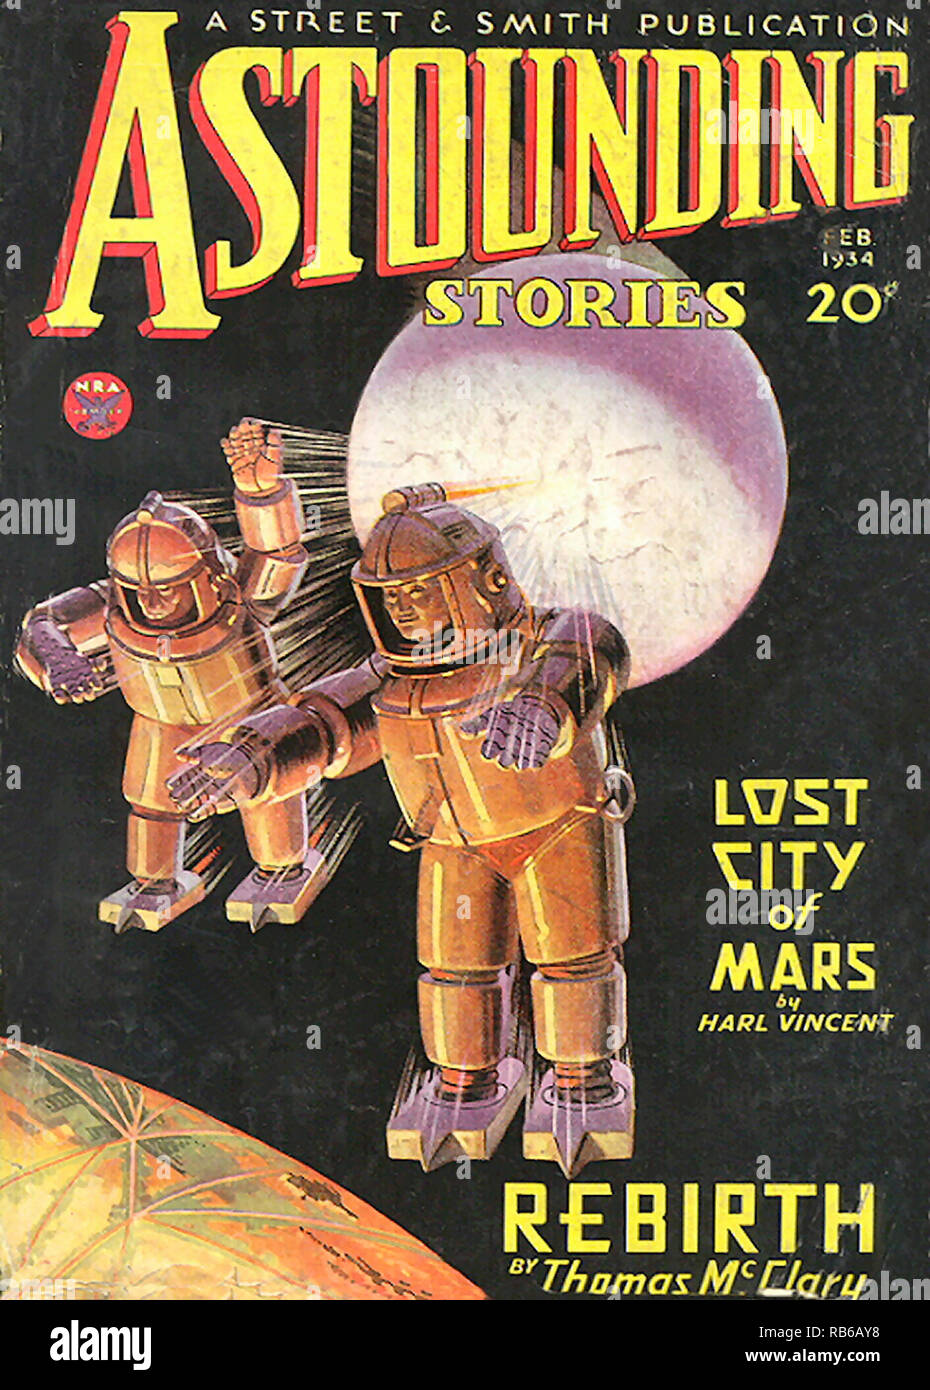 Astounding Stories # 39 February 1934 Stock Photo